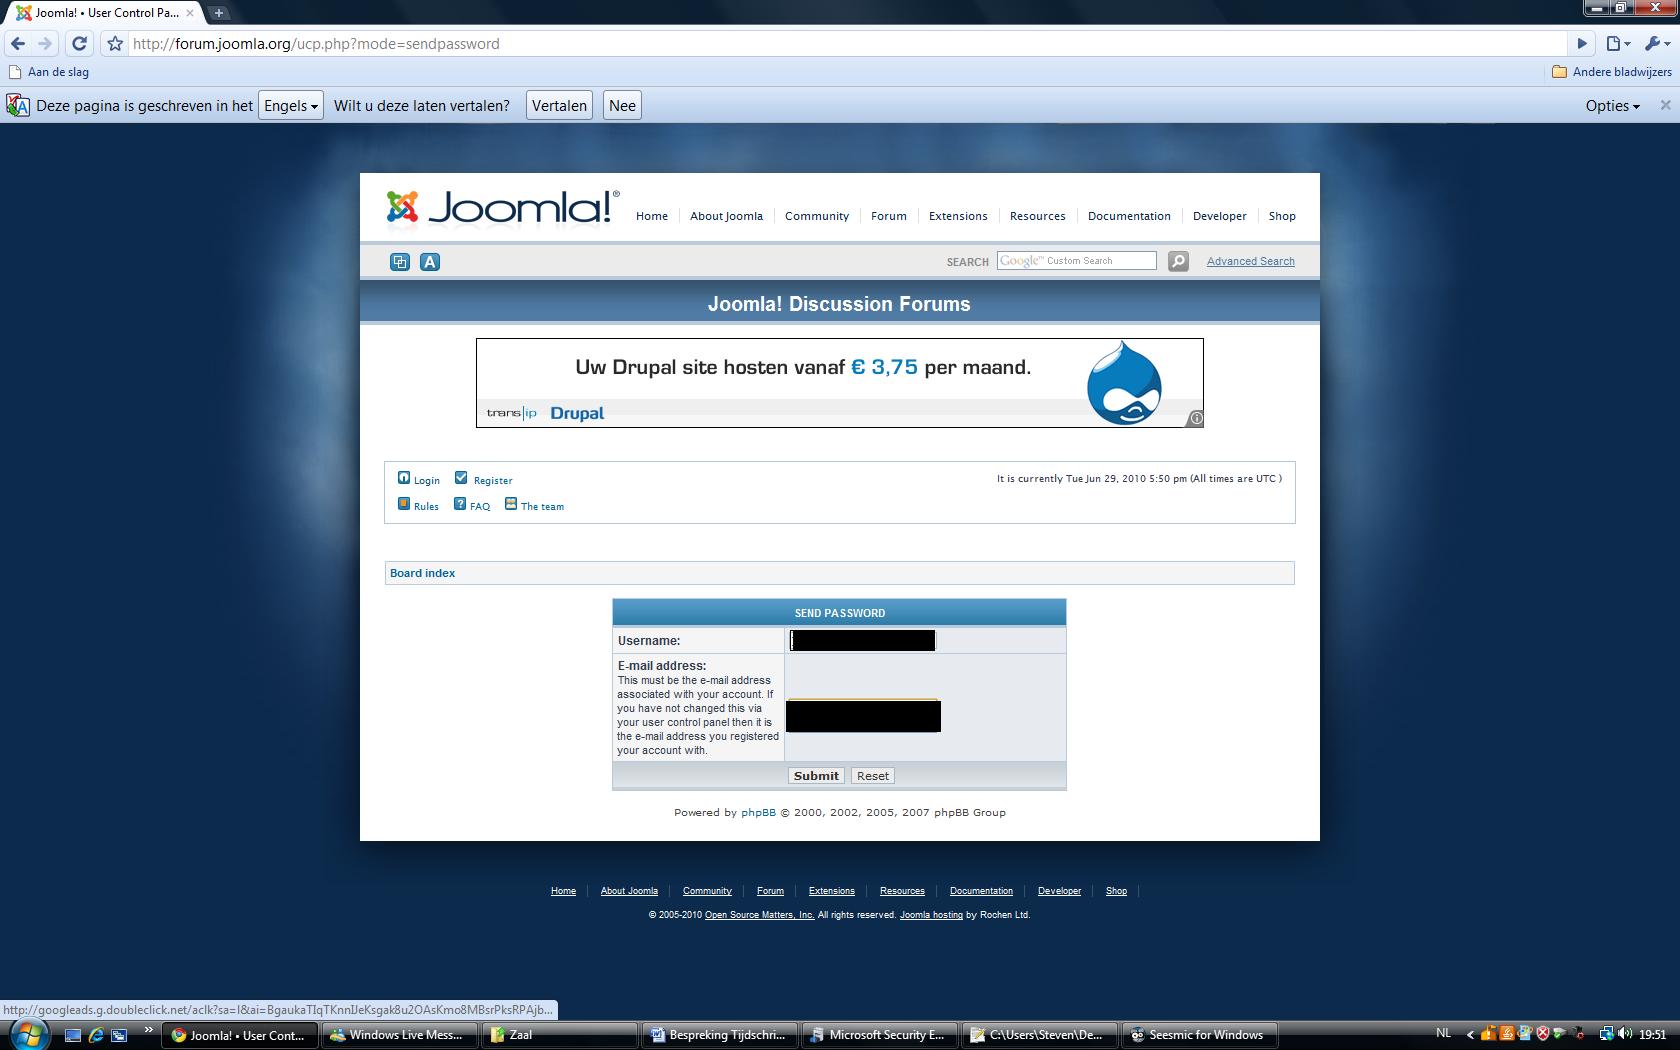 Joomla promoting Drupal